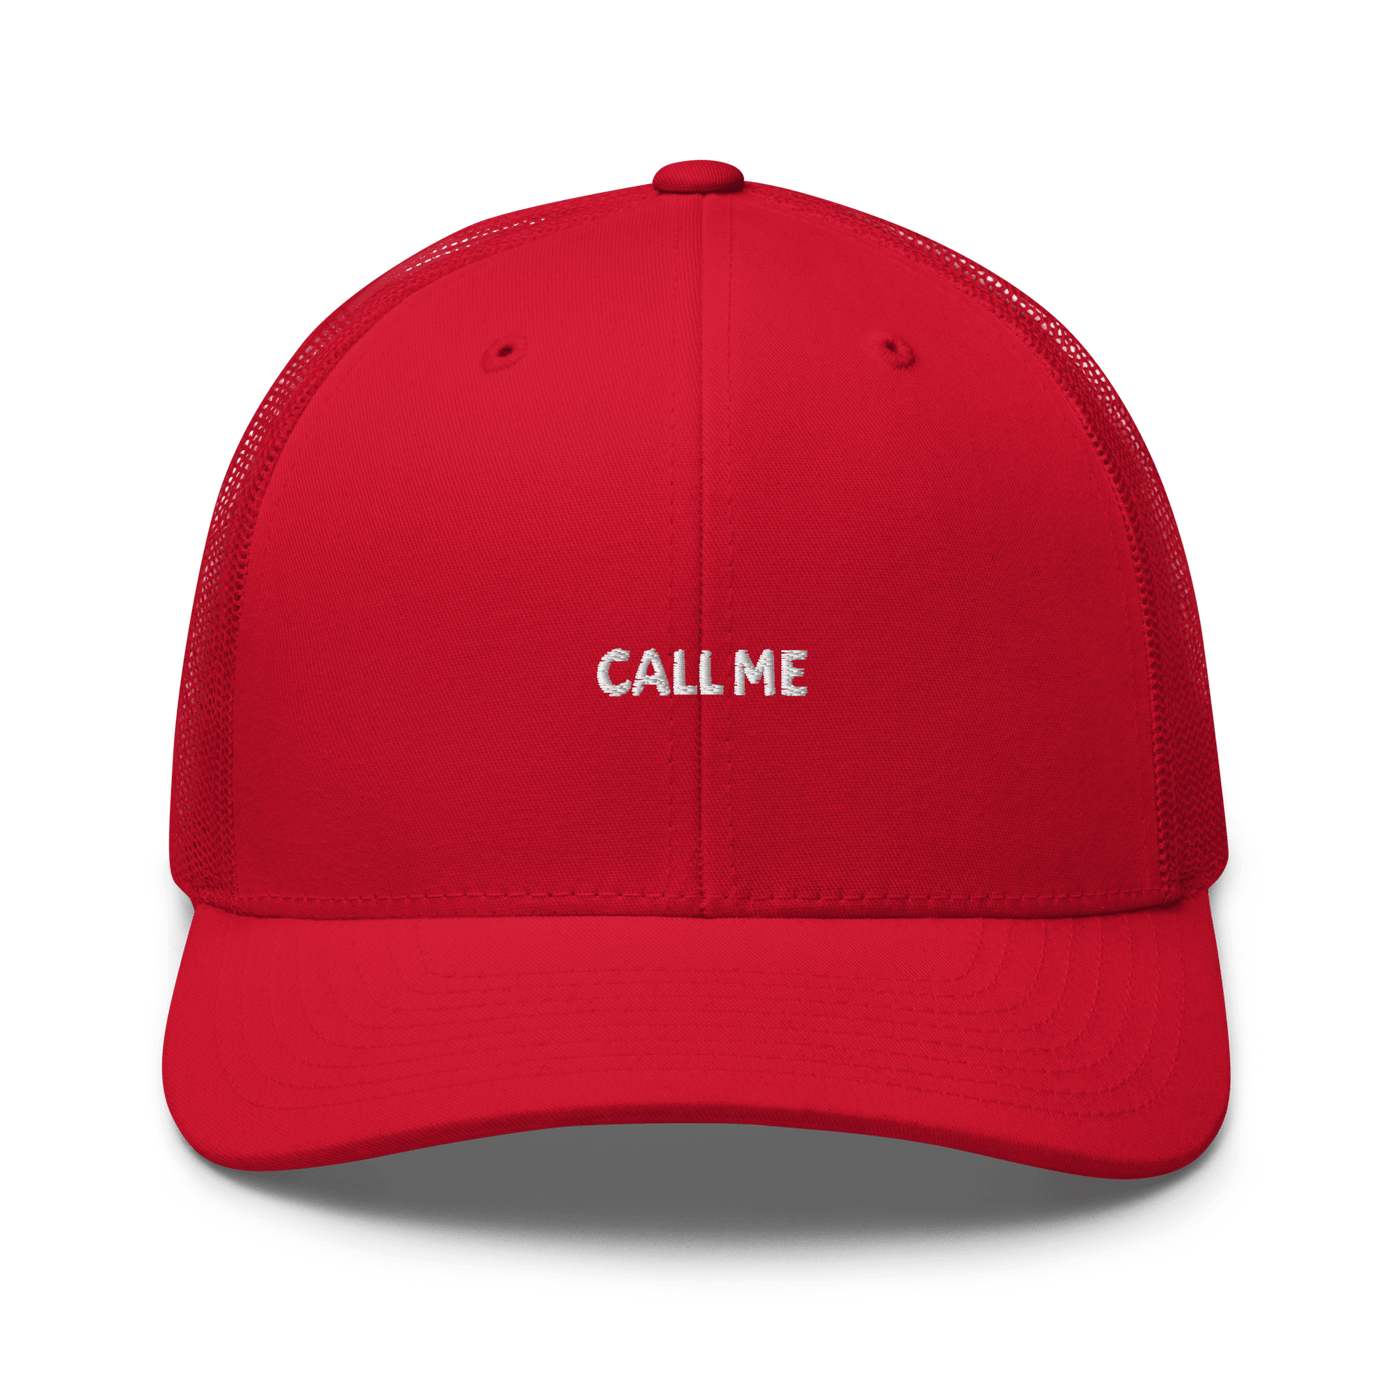 Call Me Trucker Cap - Navy - - Just Another Cap Store